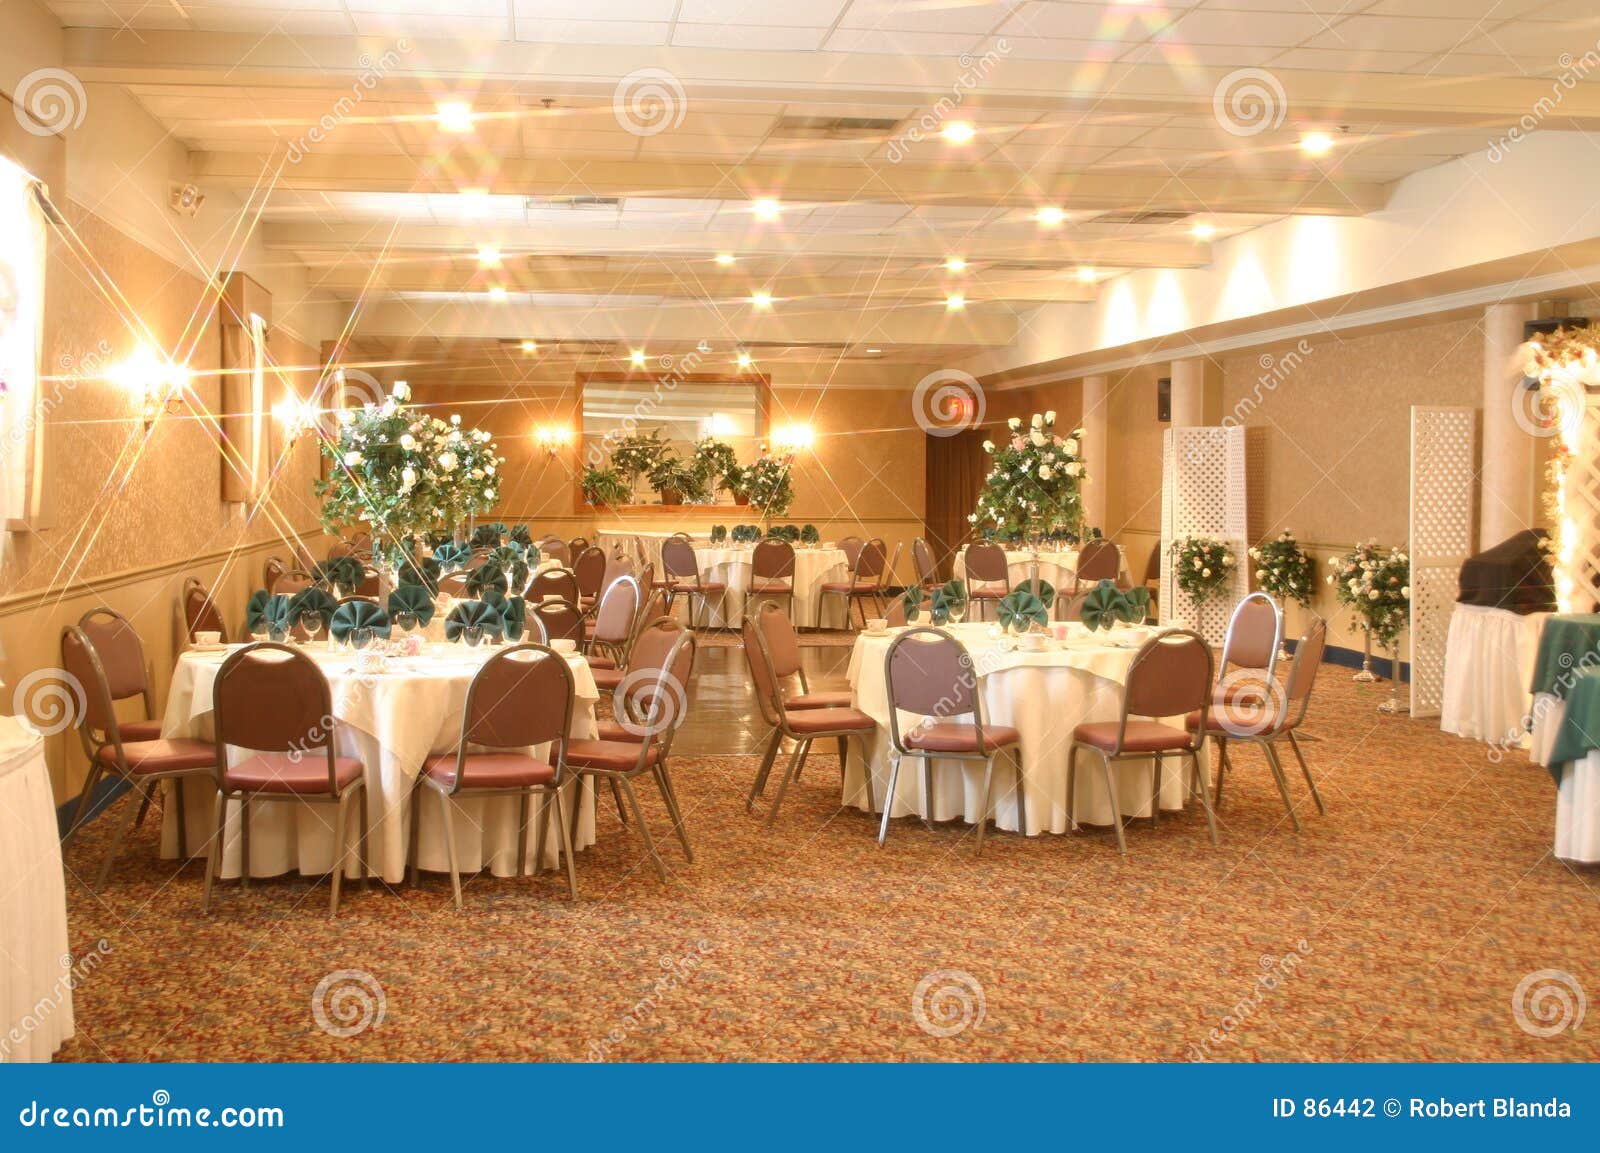 banquet facility